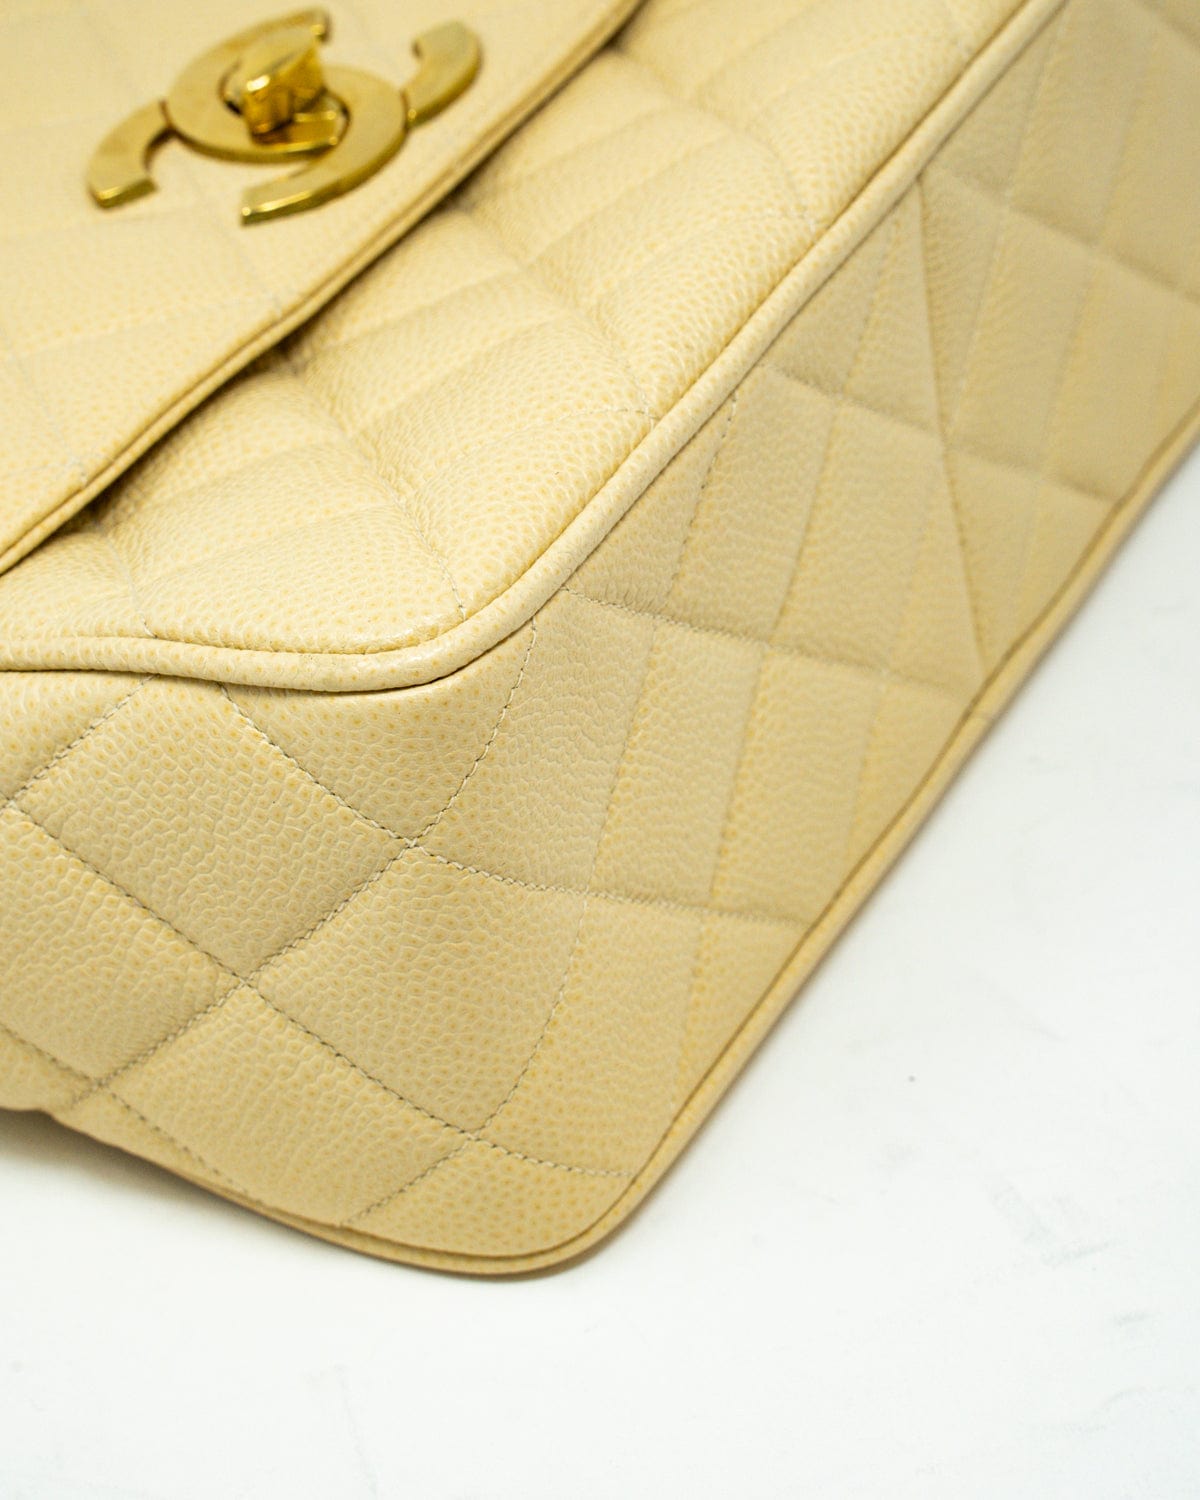 Chanel Chanel Caviar skin Satchel style crossbody bag with Jumbo CC lock - AWL2570